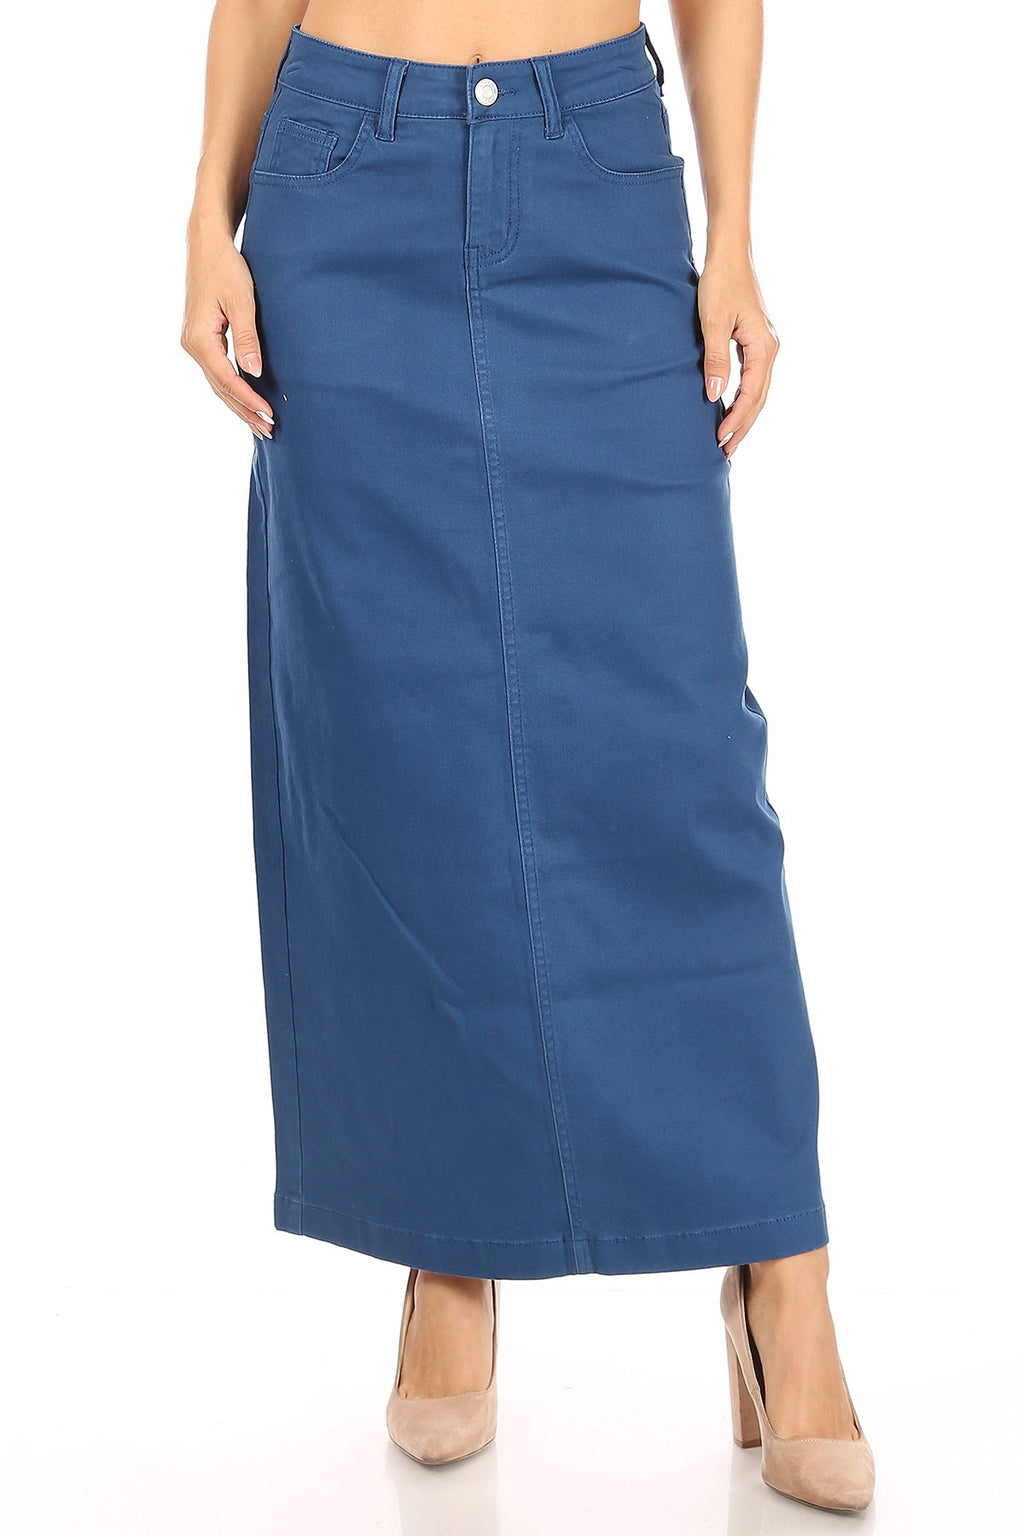 Women's Juniors/Plus Size Long Pencil Stretch Twill Skirt